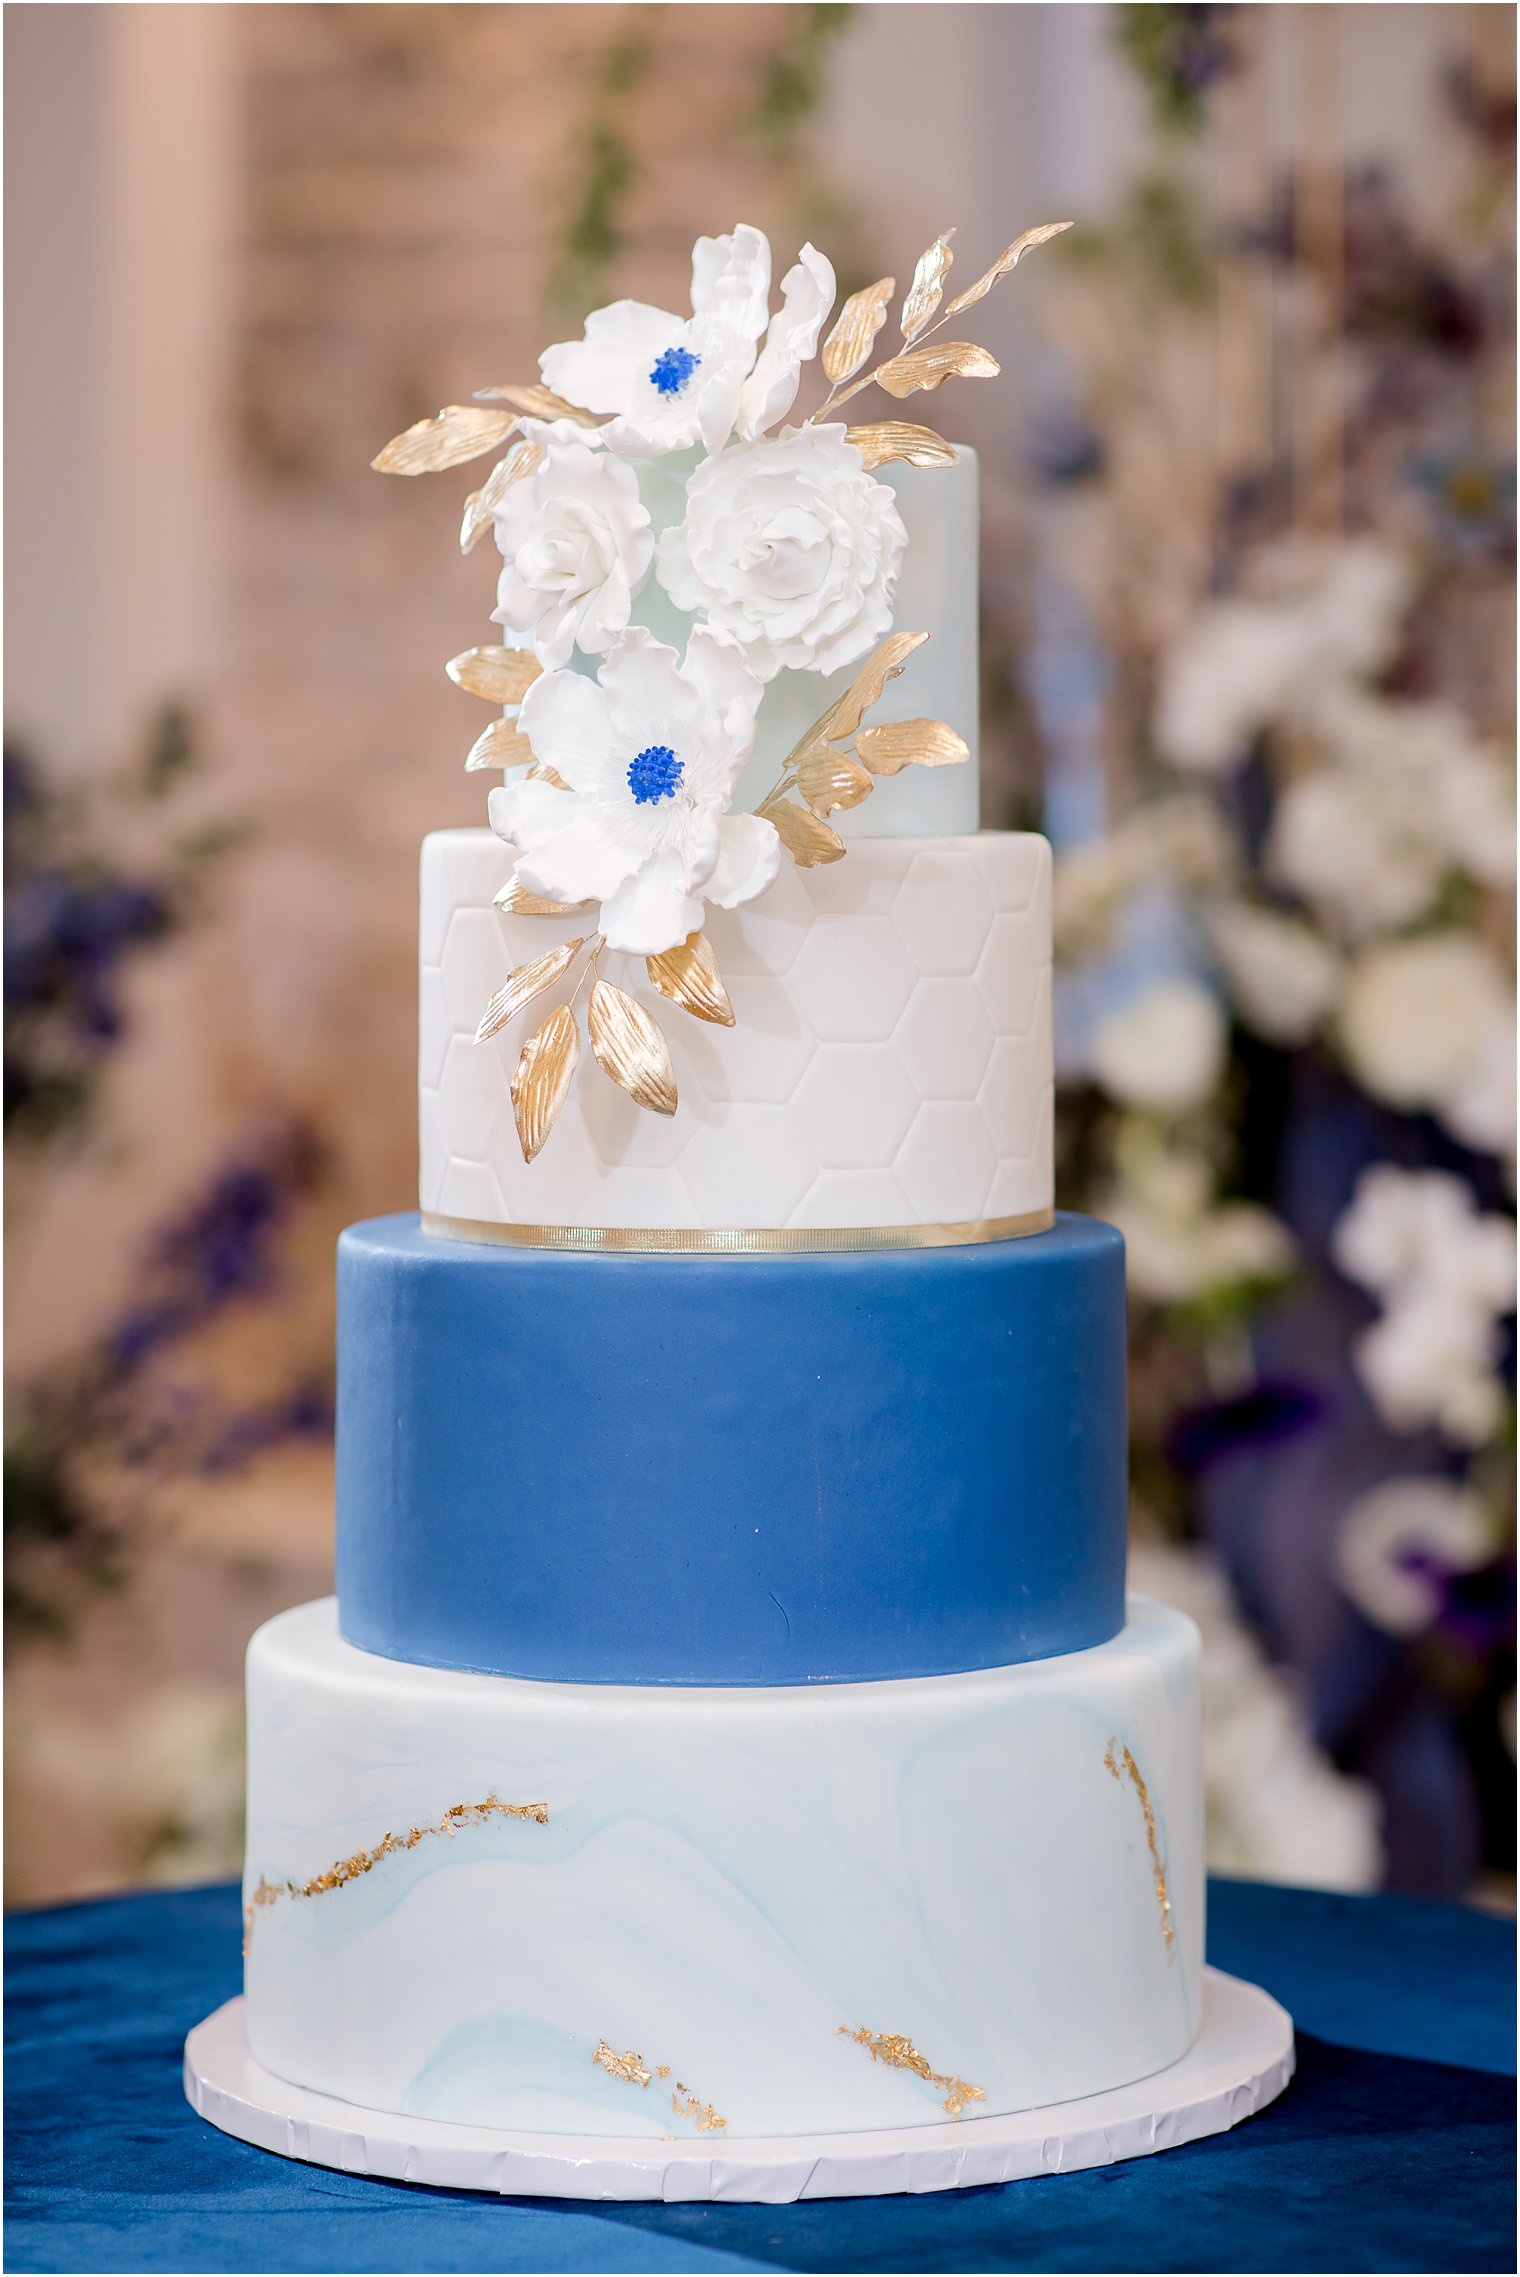 Wedding cake by Polkadot Cake Shop